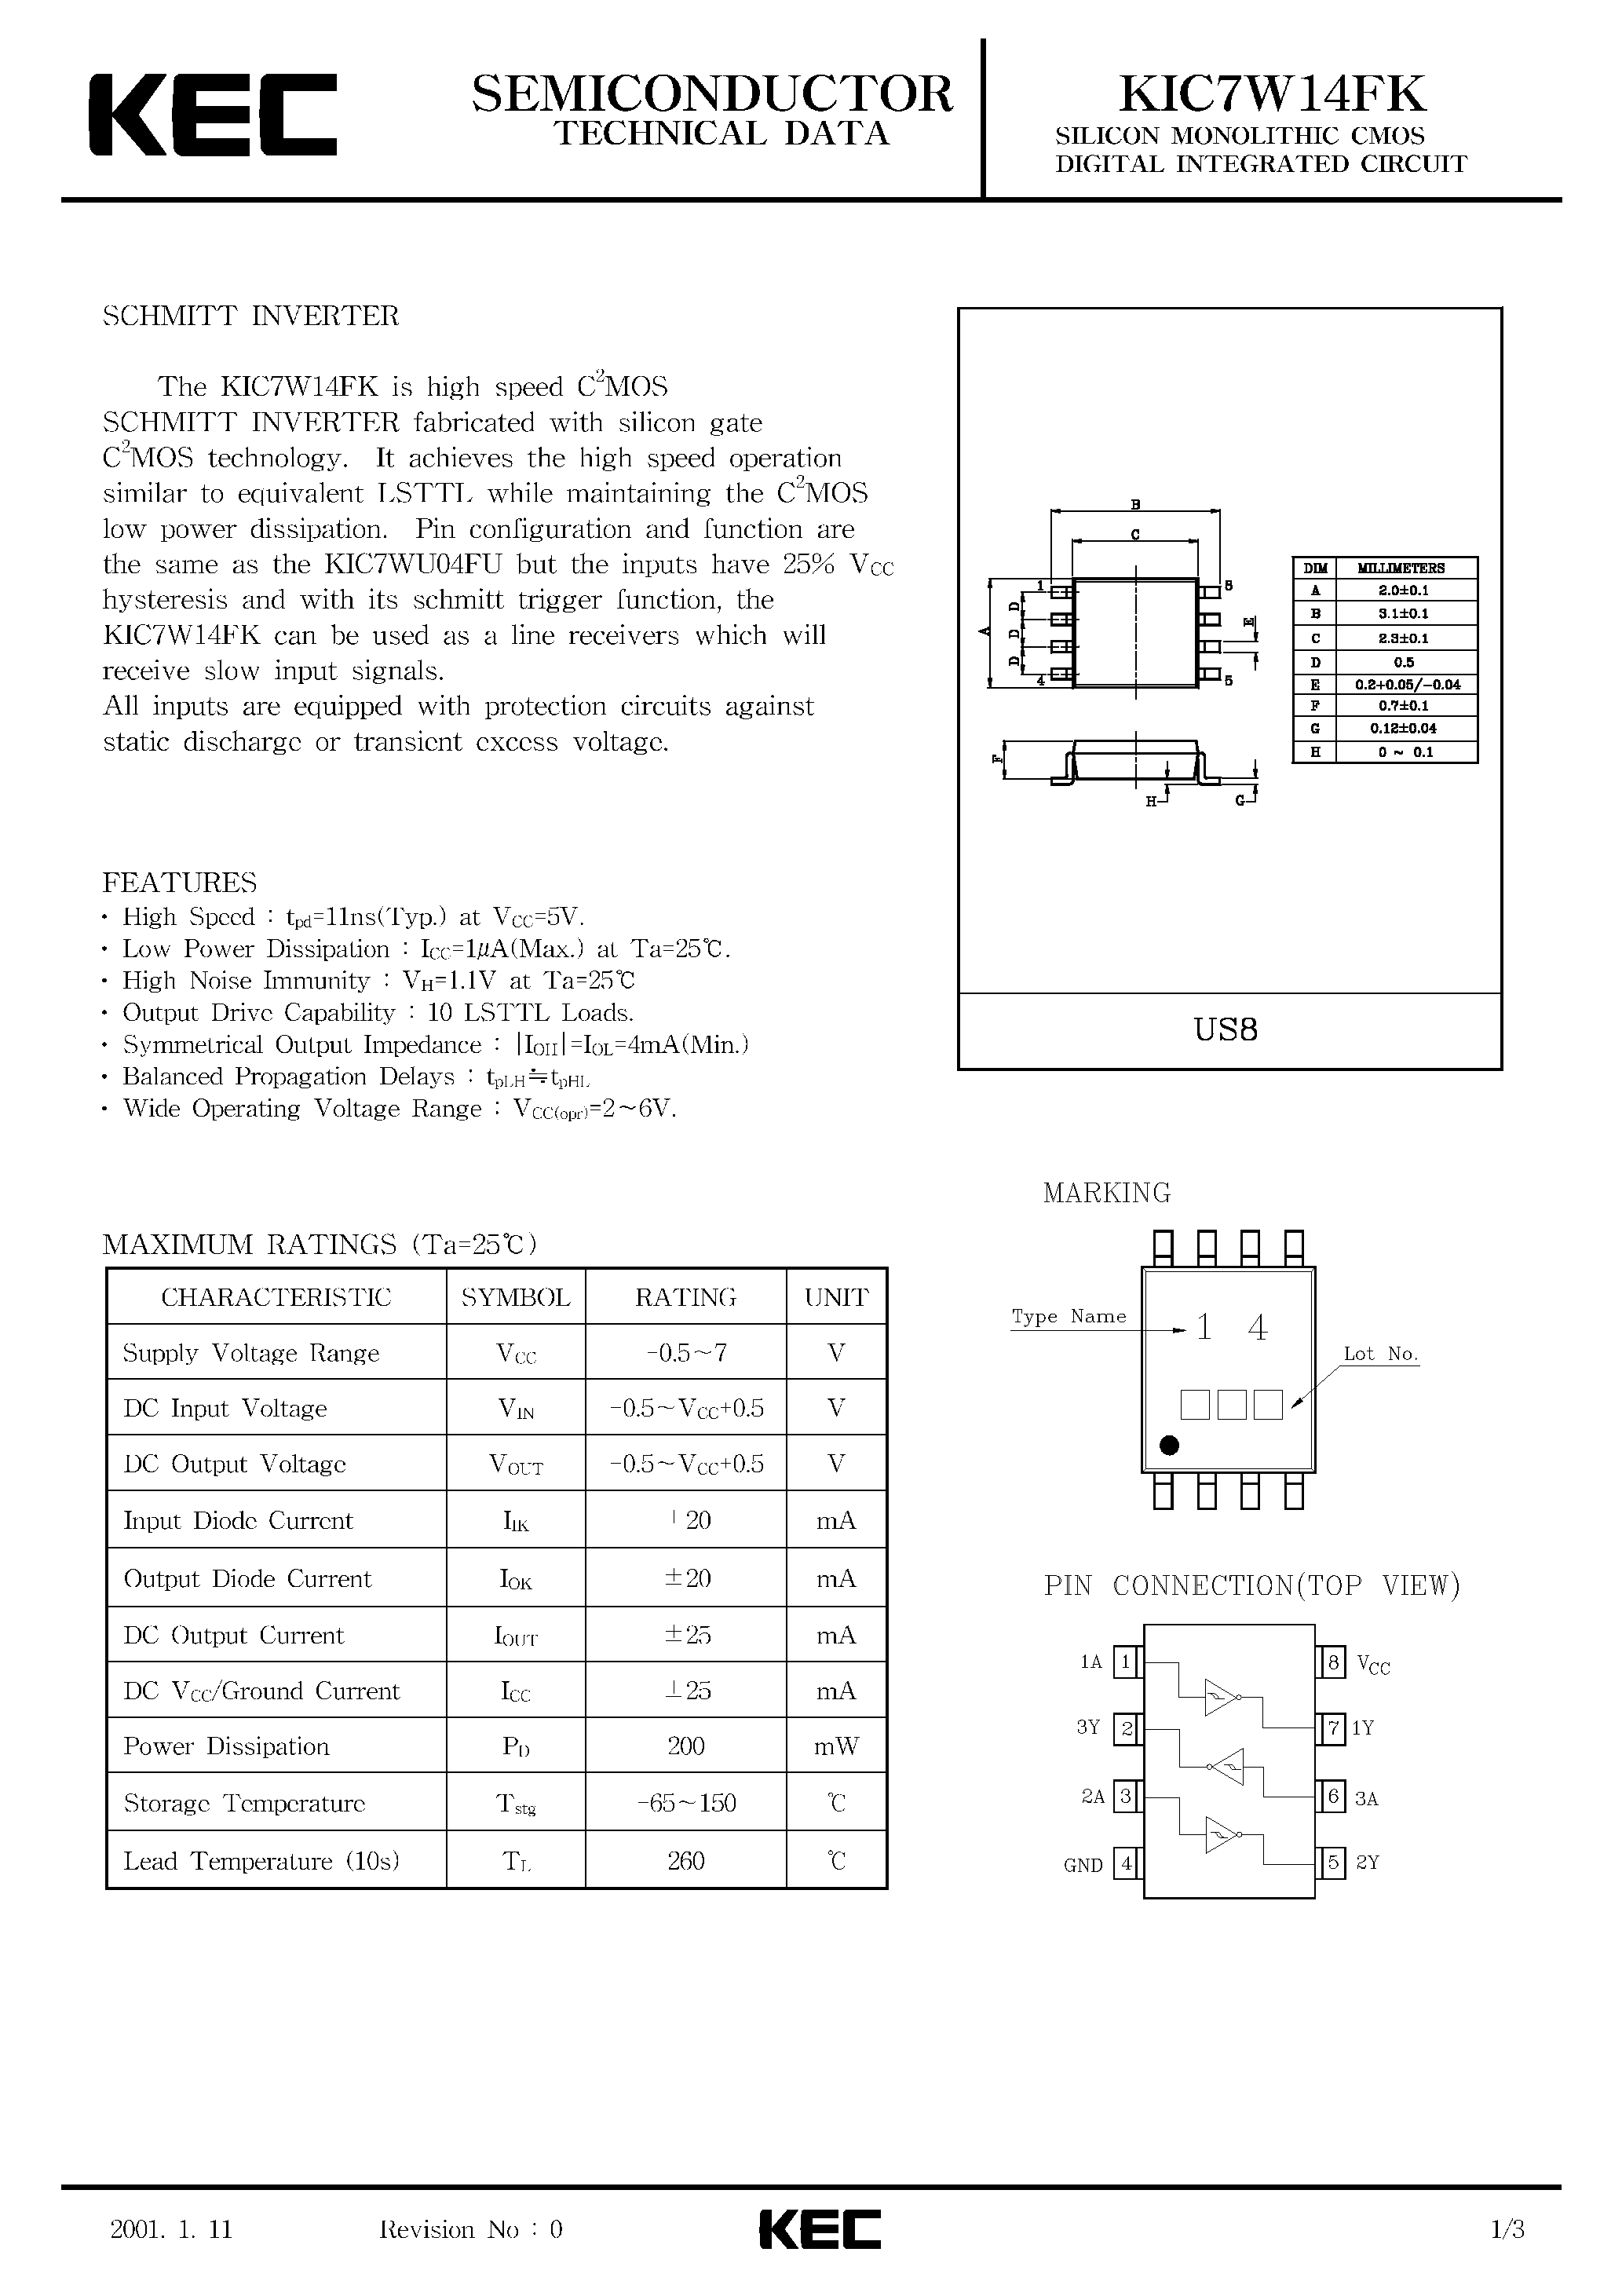 Datasheet KIC714FK - SILICON MONOLITHIC CMOS DIGITAL INTEGRATED CIRCUIT (SCHMITT INVERTER) page 1